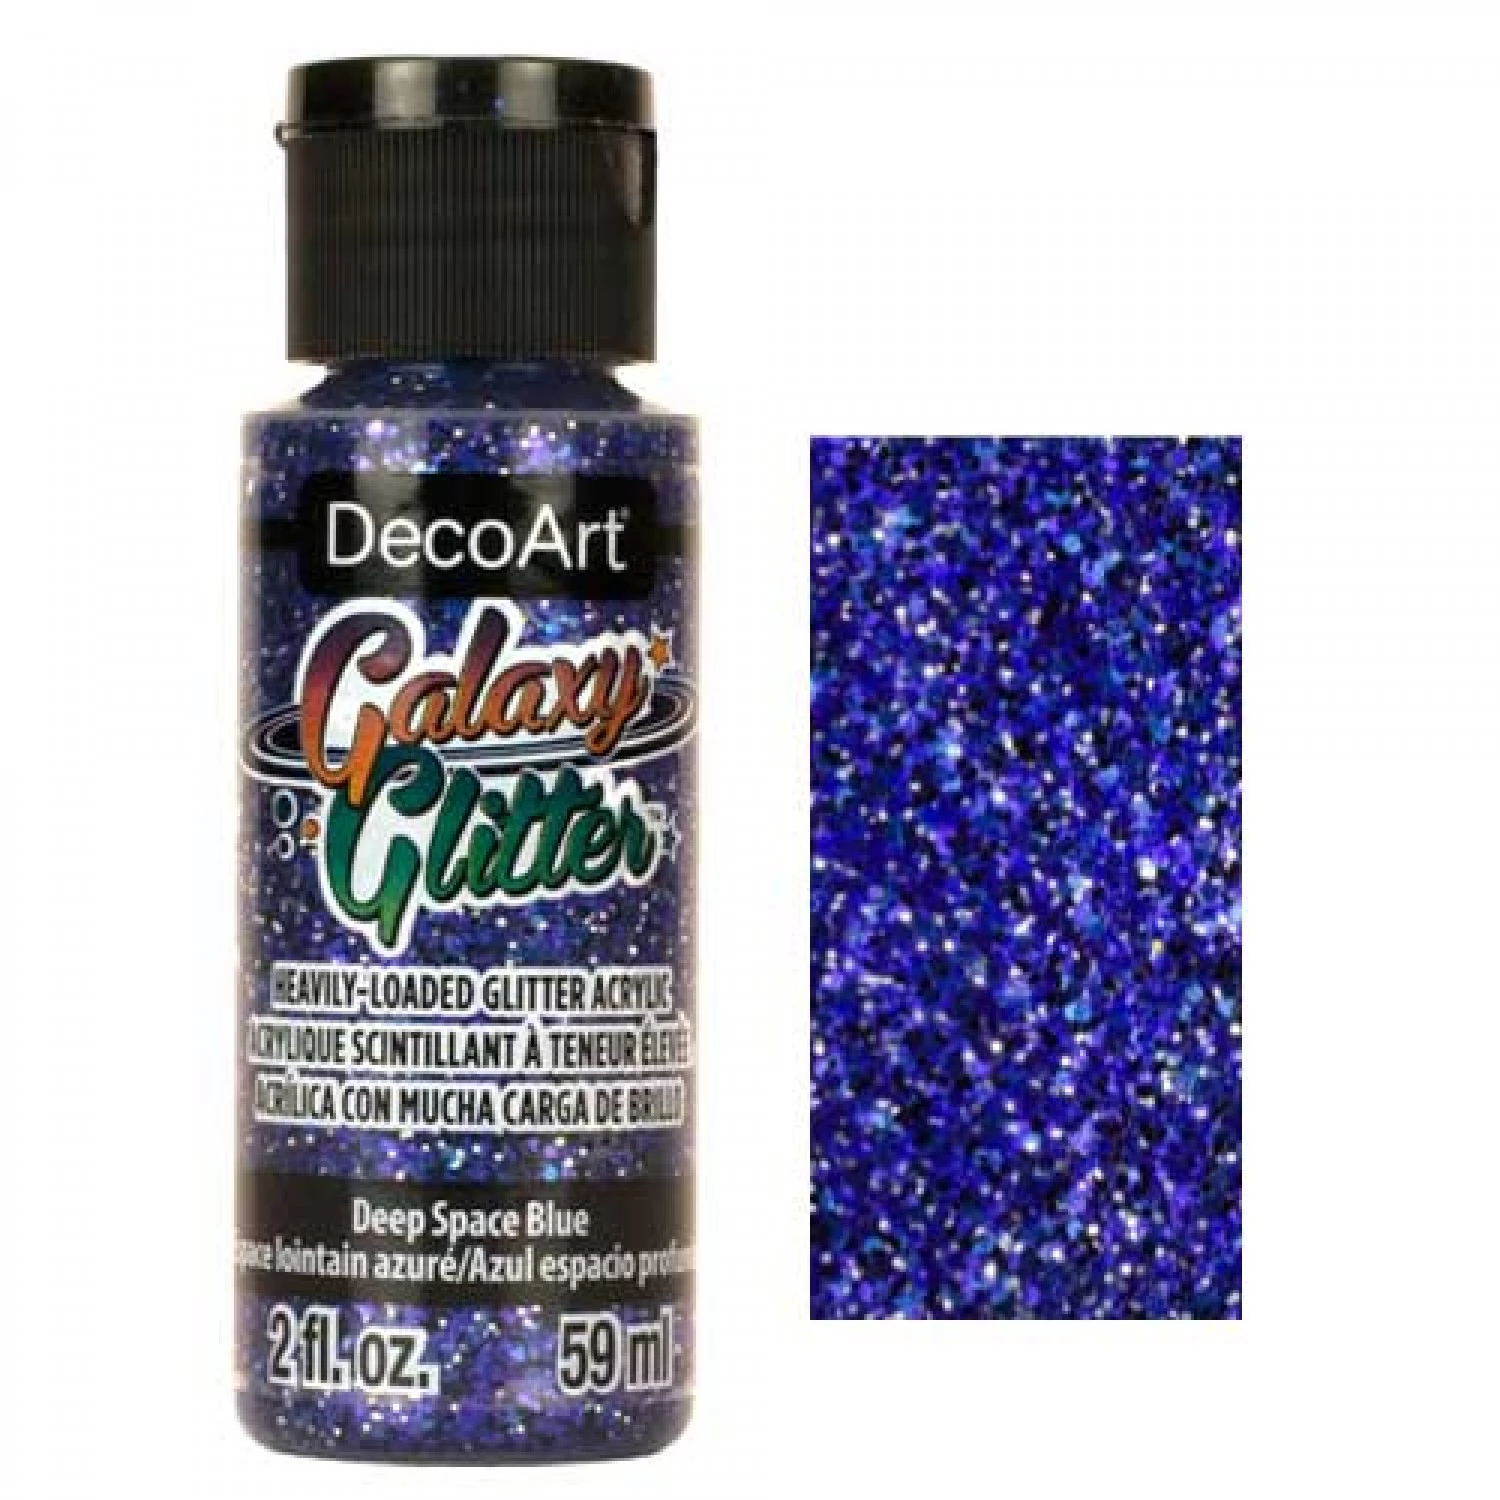 DecoArt Galaxy Glitter Paint - Silver Moon, 2 oz